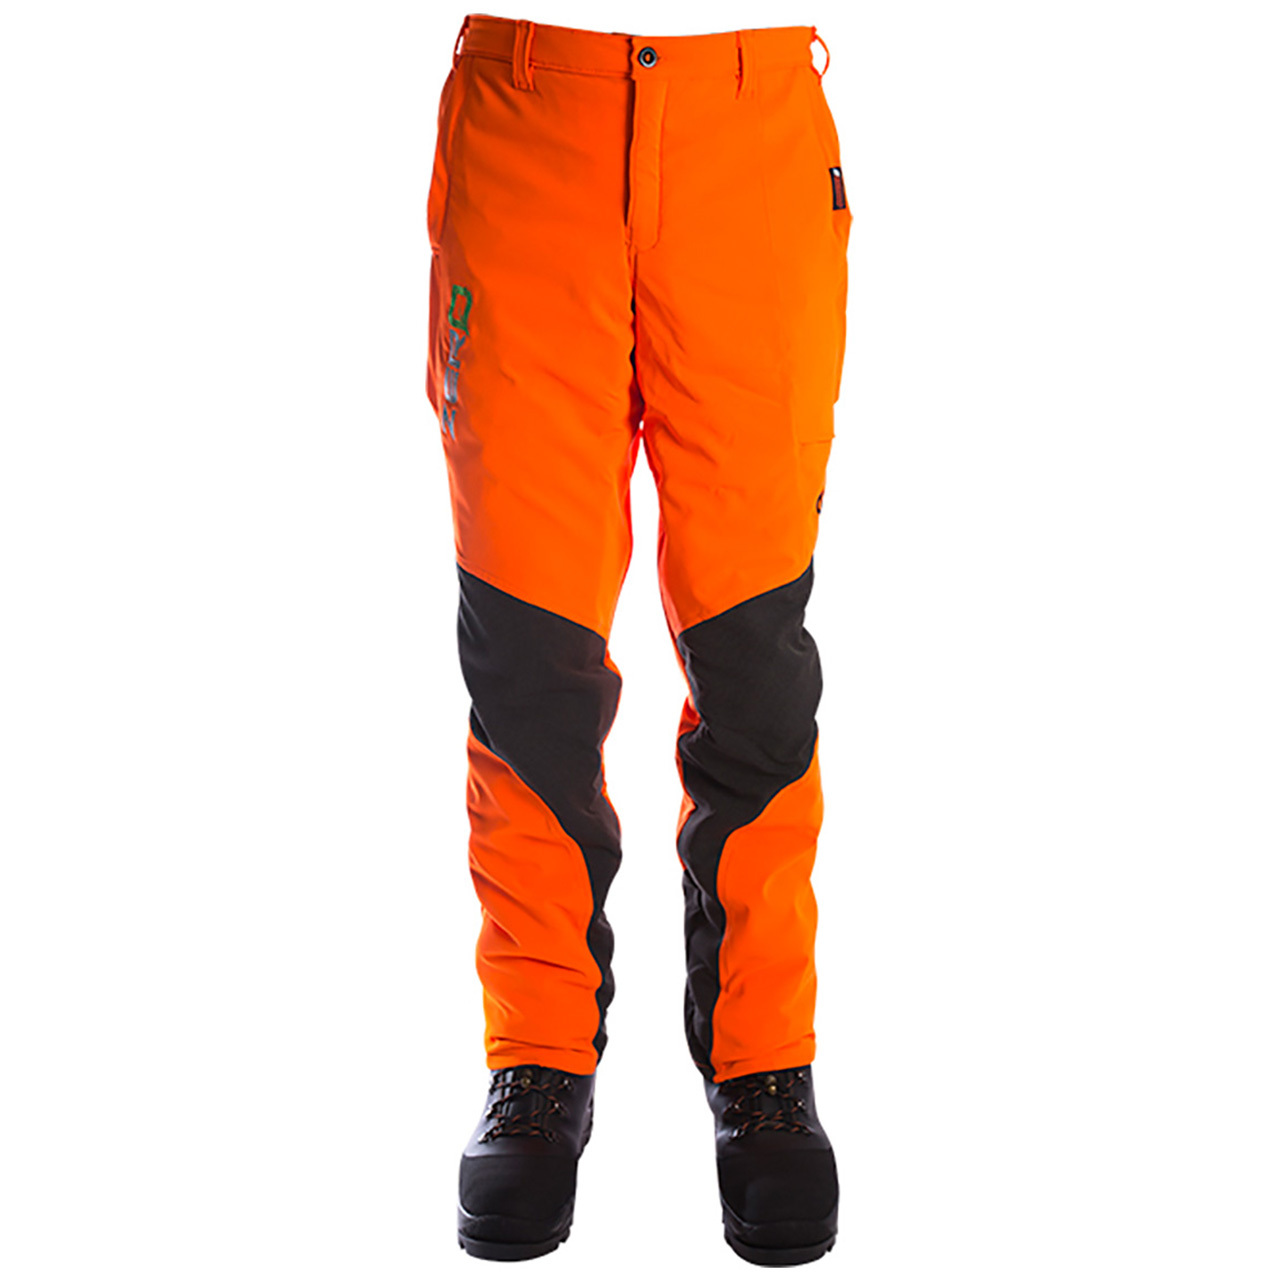 Clogger Zero Gen2 Light & Cool Women's Chainsaw Pants - Hi Vis Orange